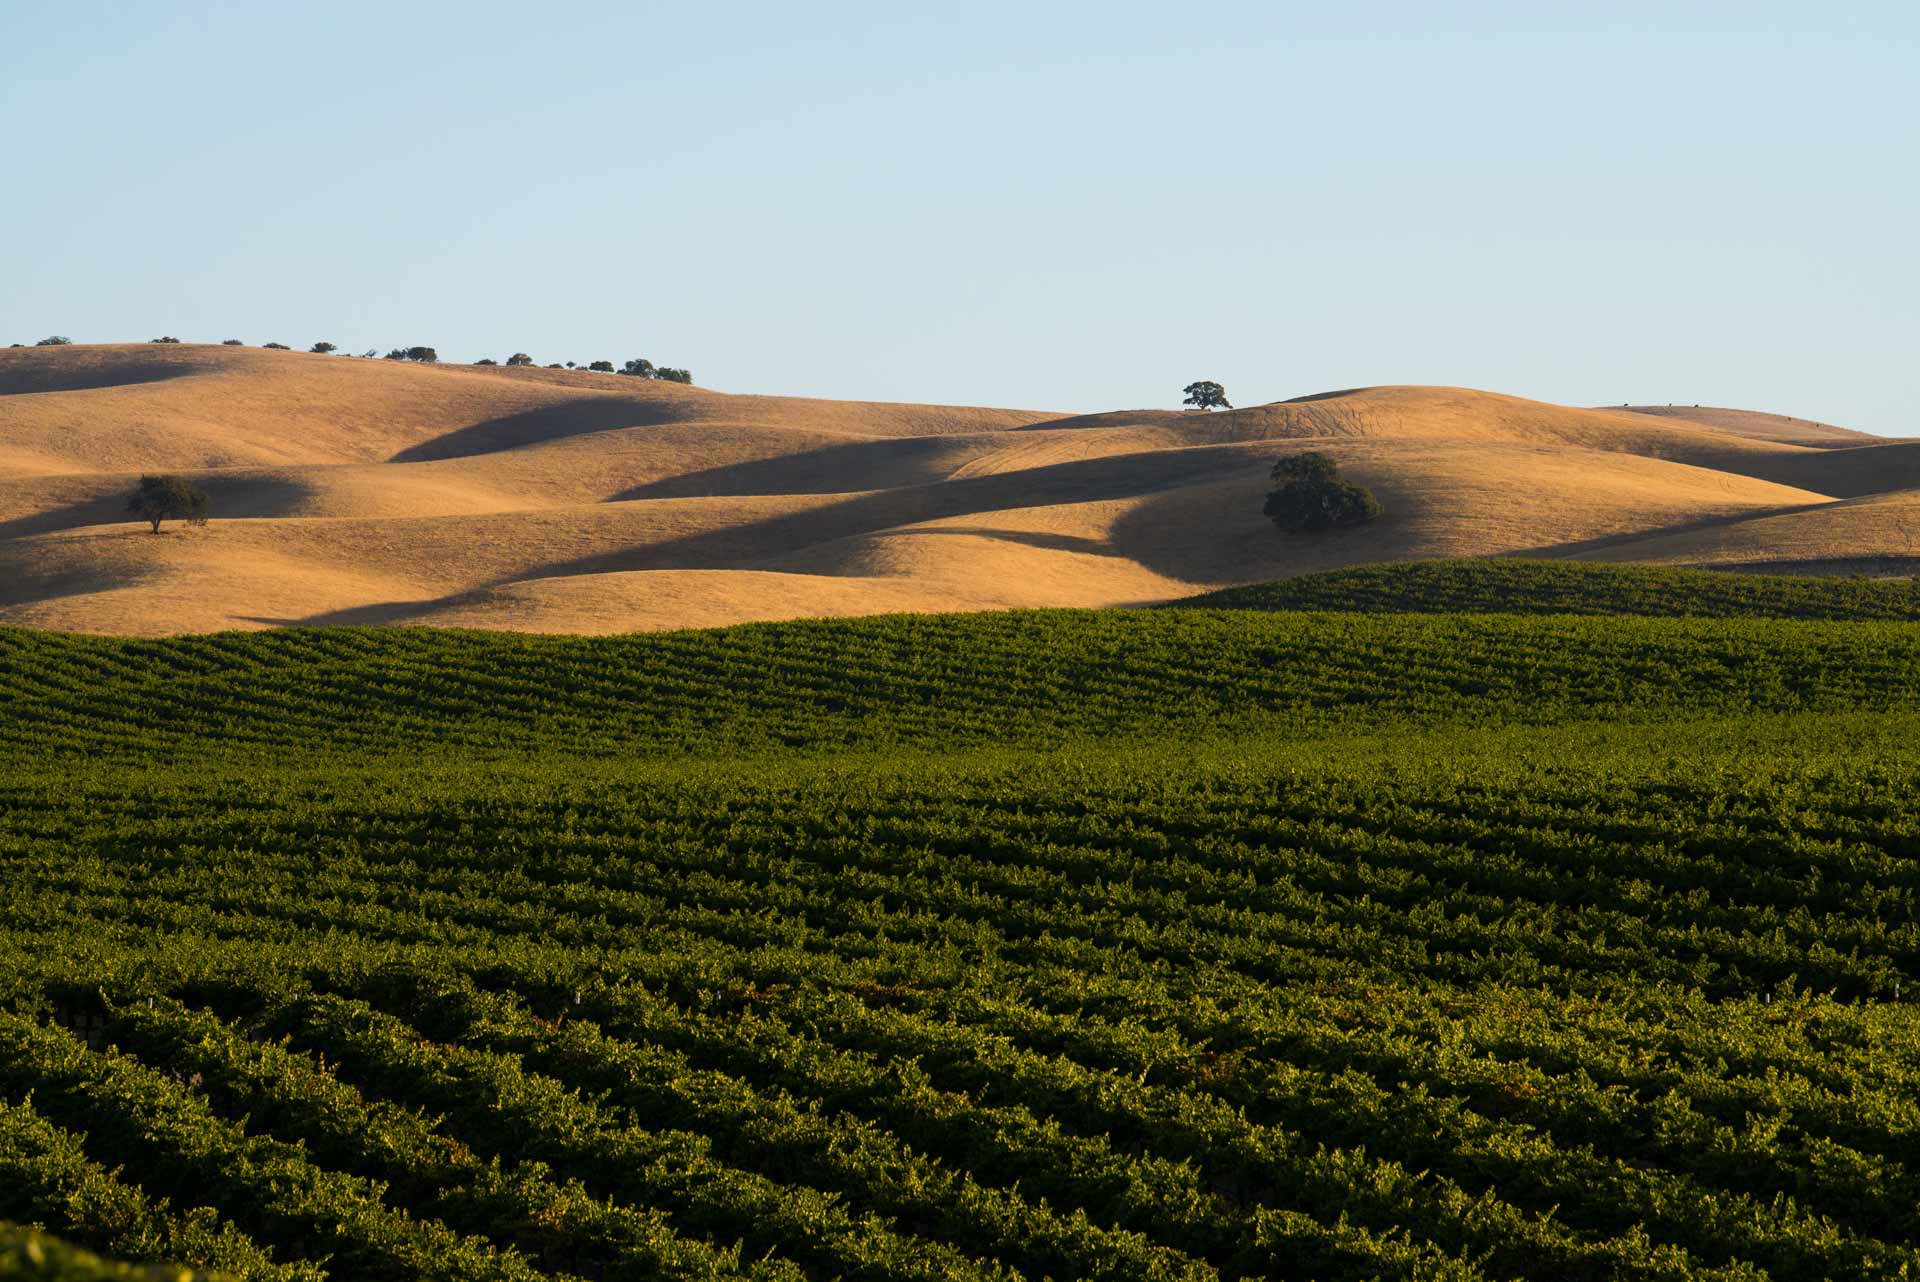 Hames Valley vineyard